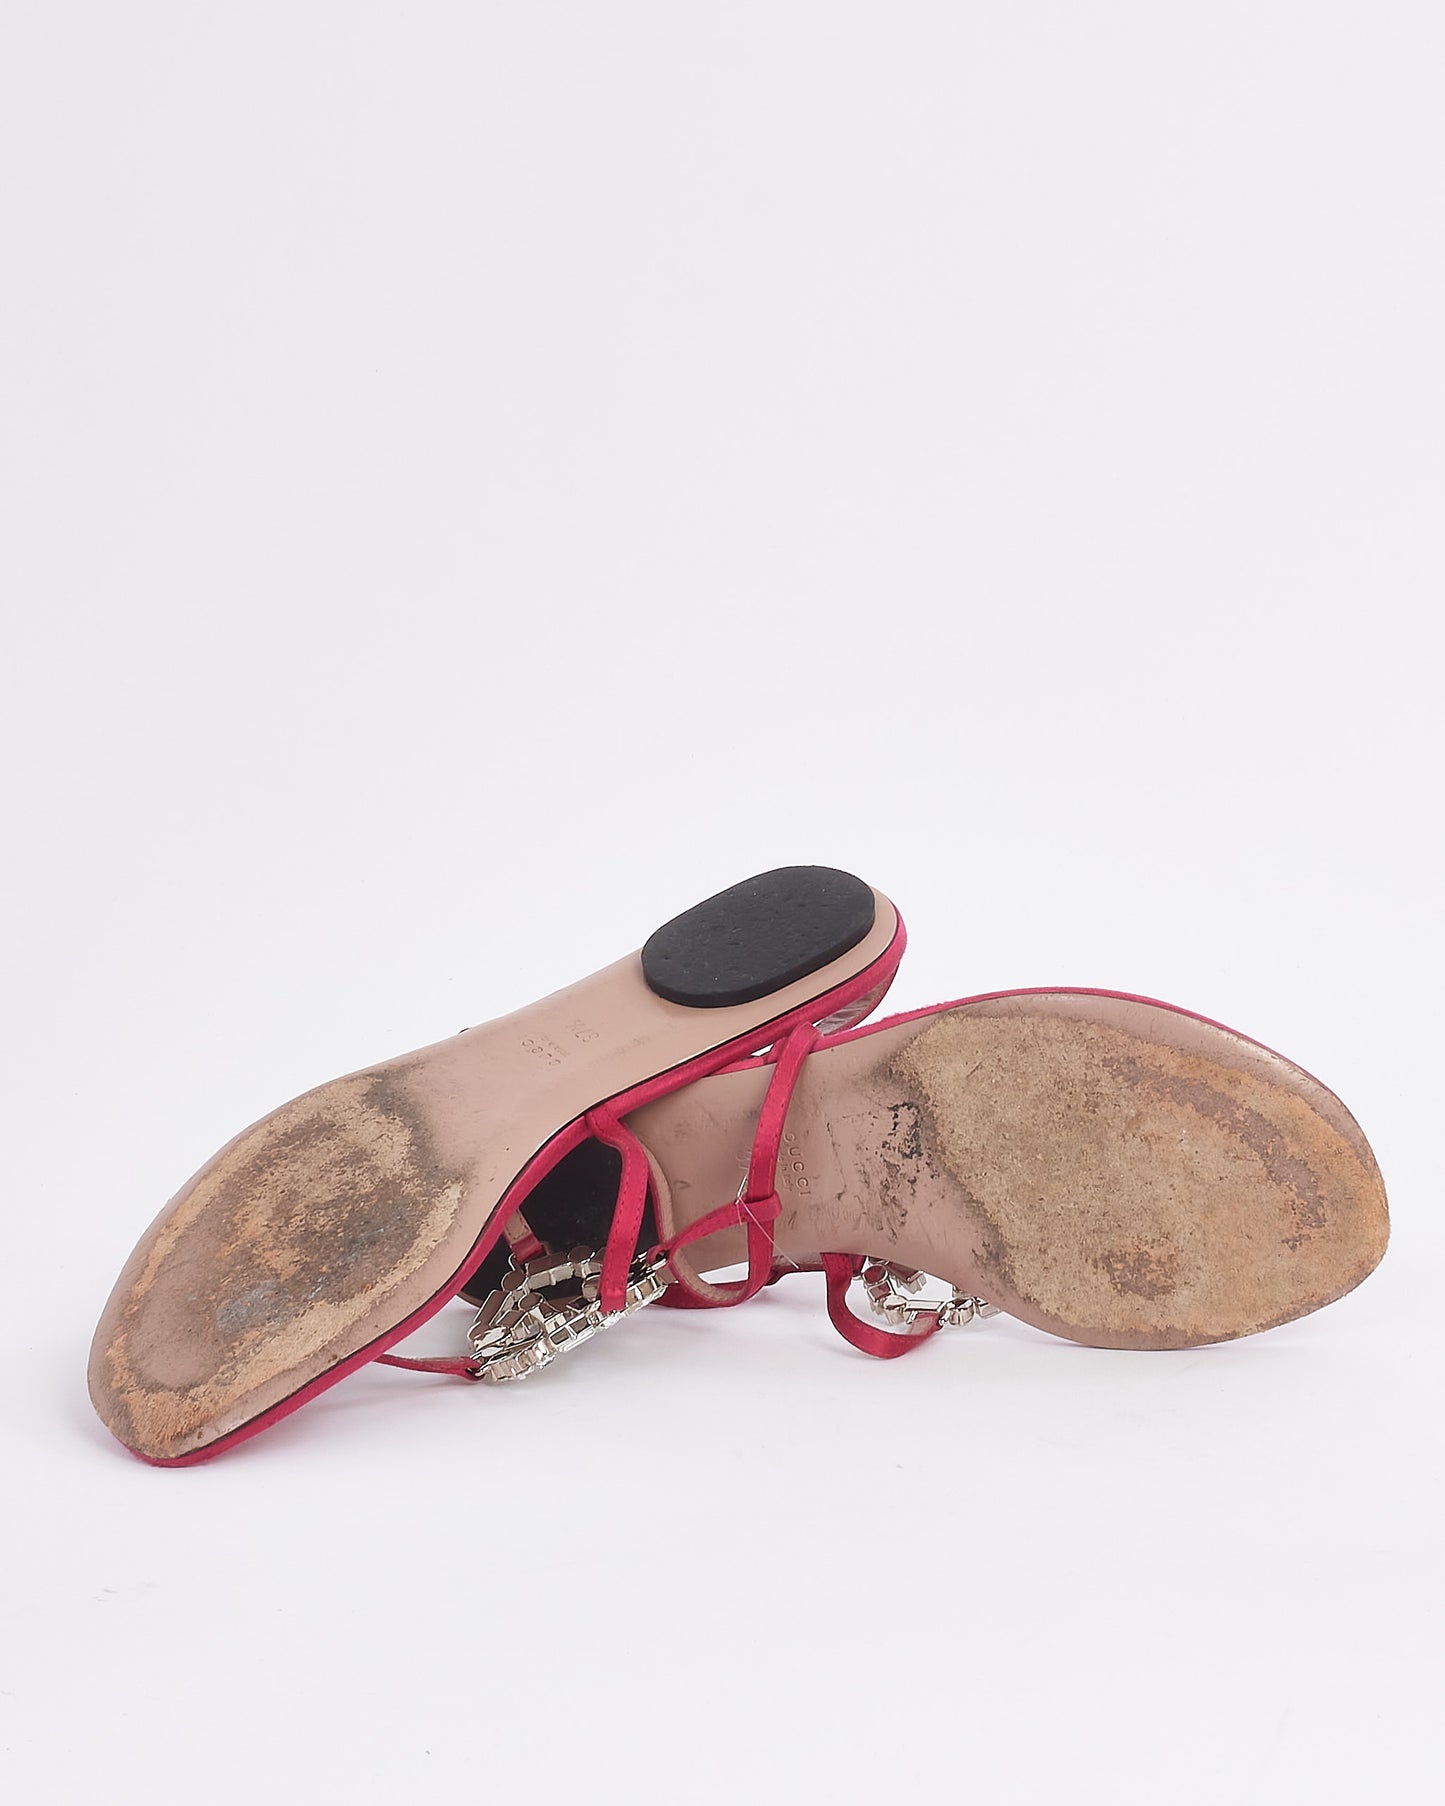 Sandales en cristal GG en satin fuchsia Gucci - 37,5